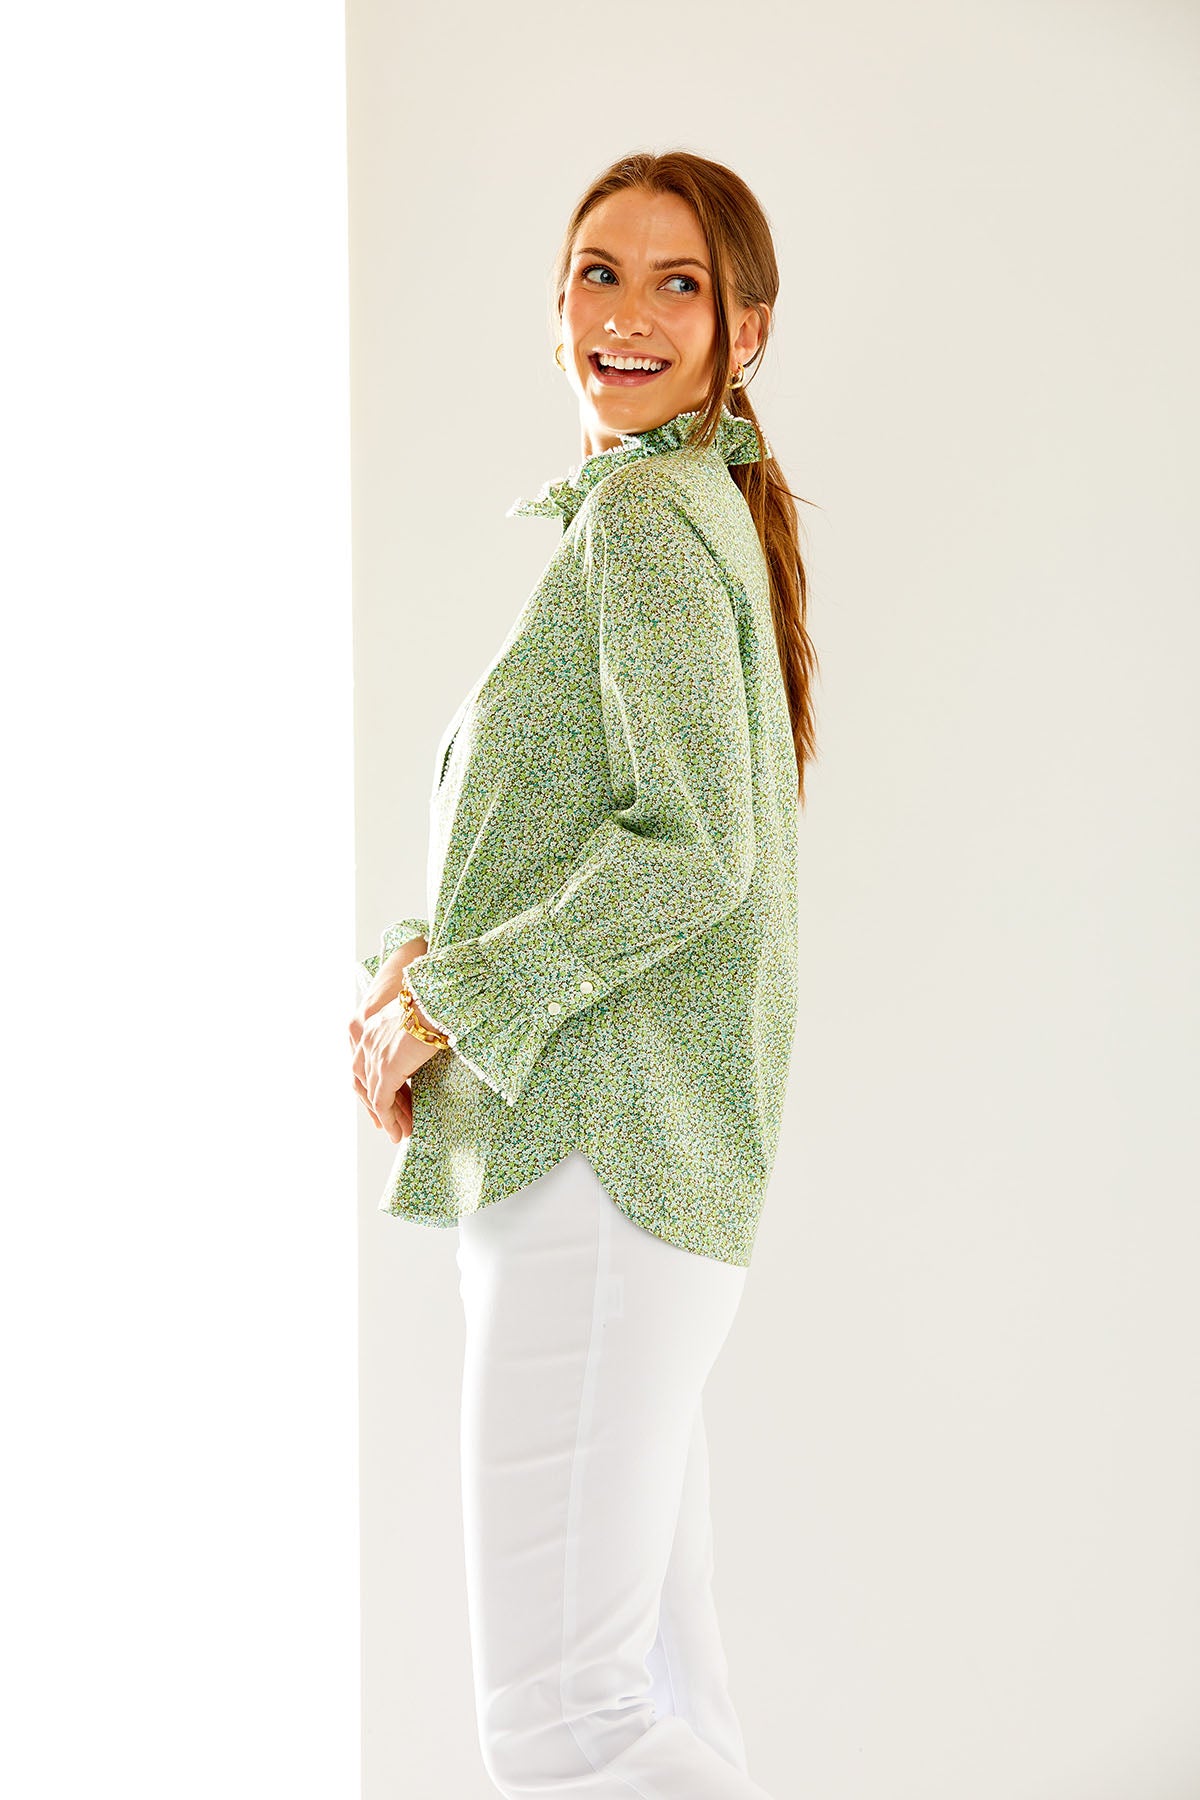 Woman in long sleeve green blouse